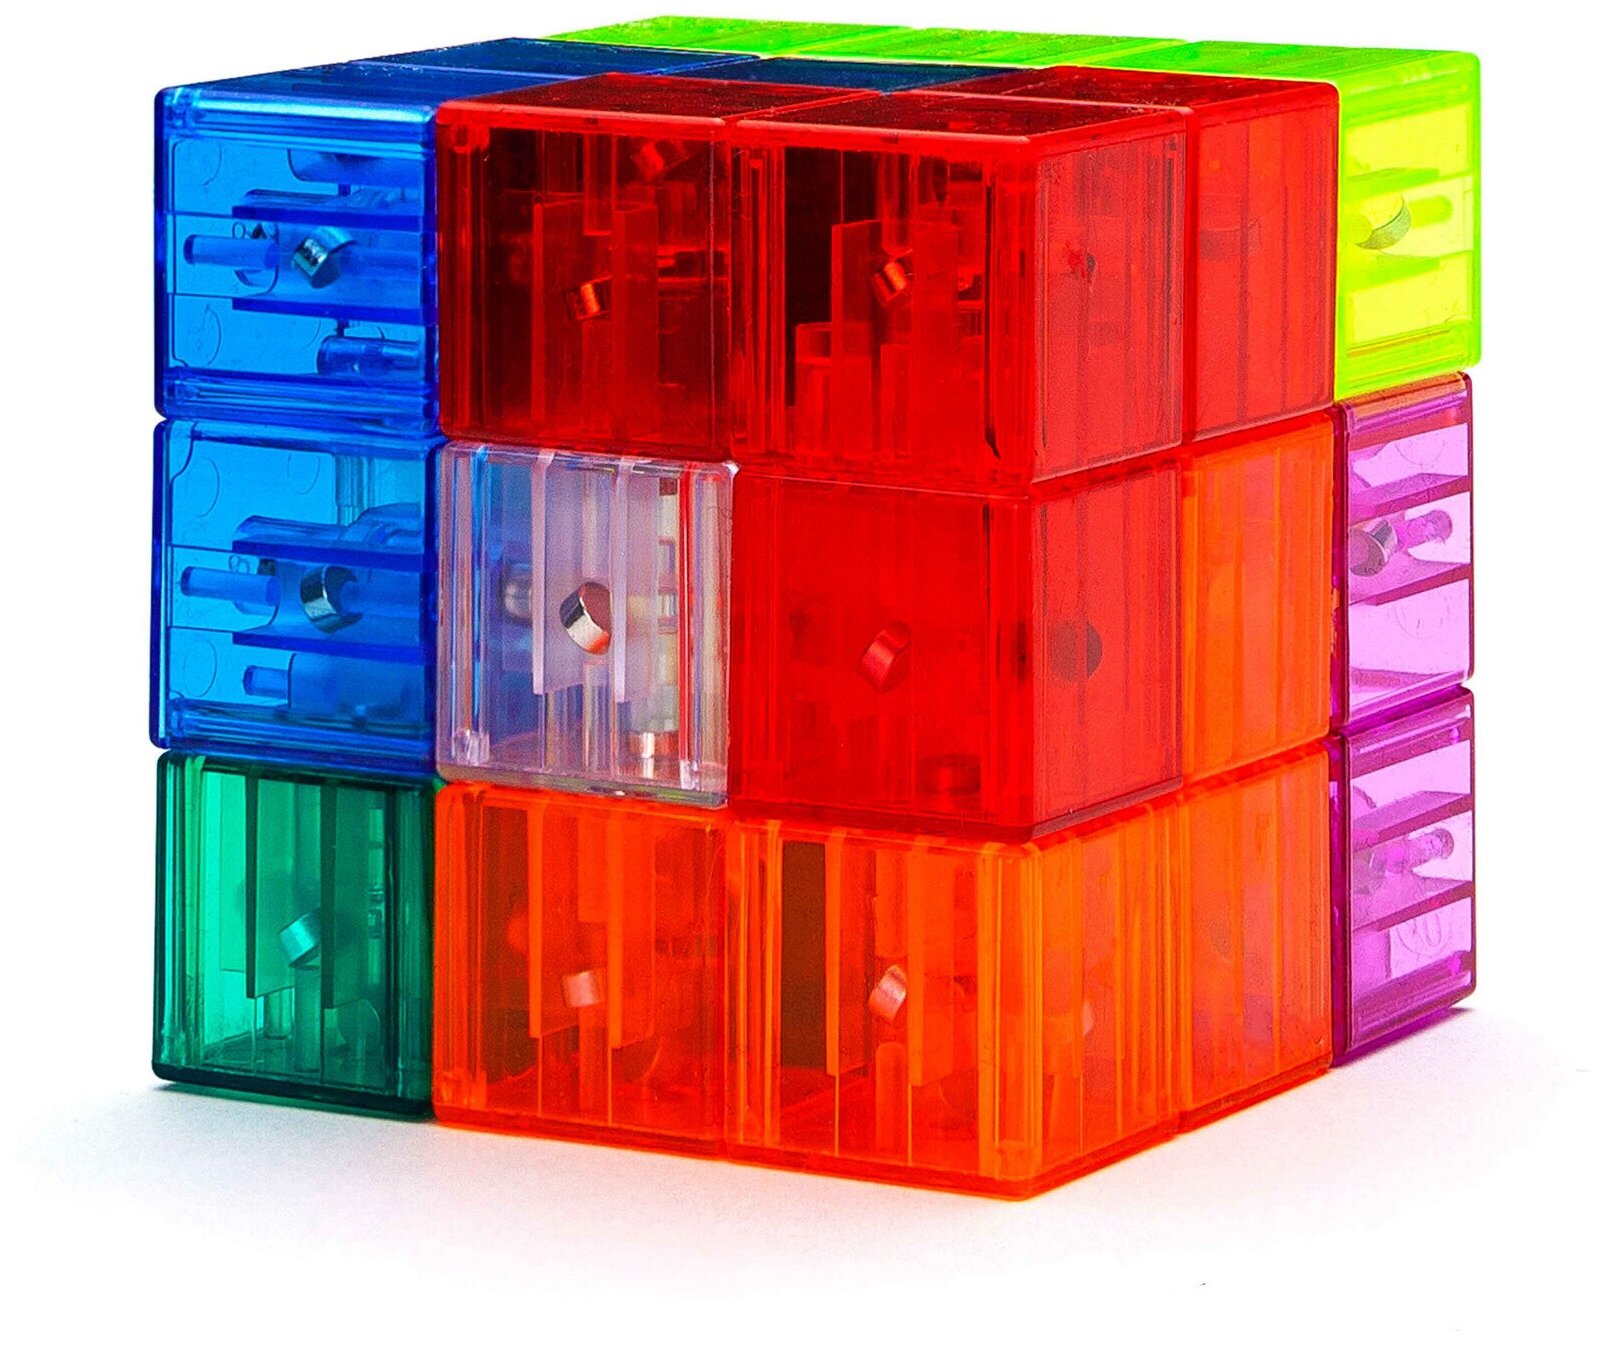   3D   YJ Magnet Blocks Cube, transparent